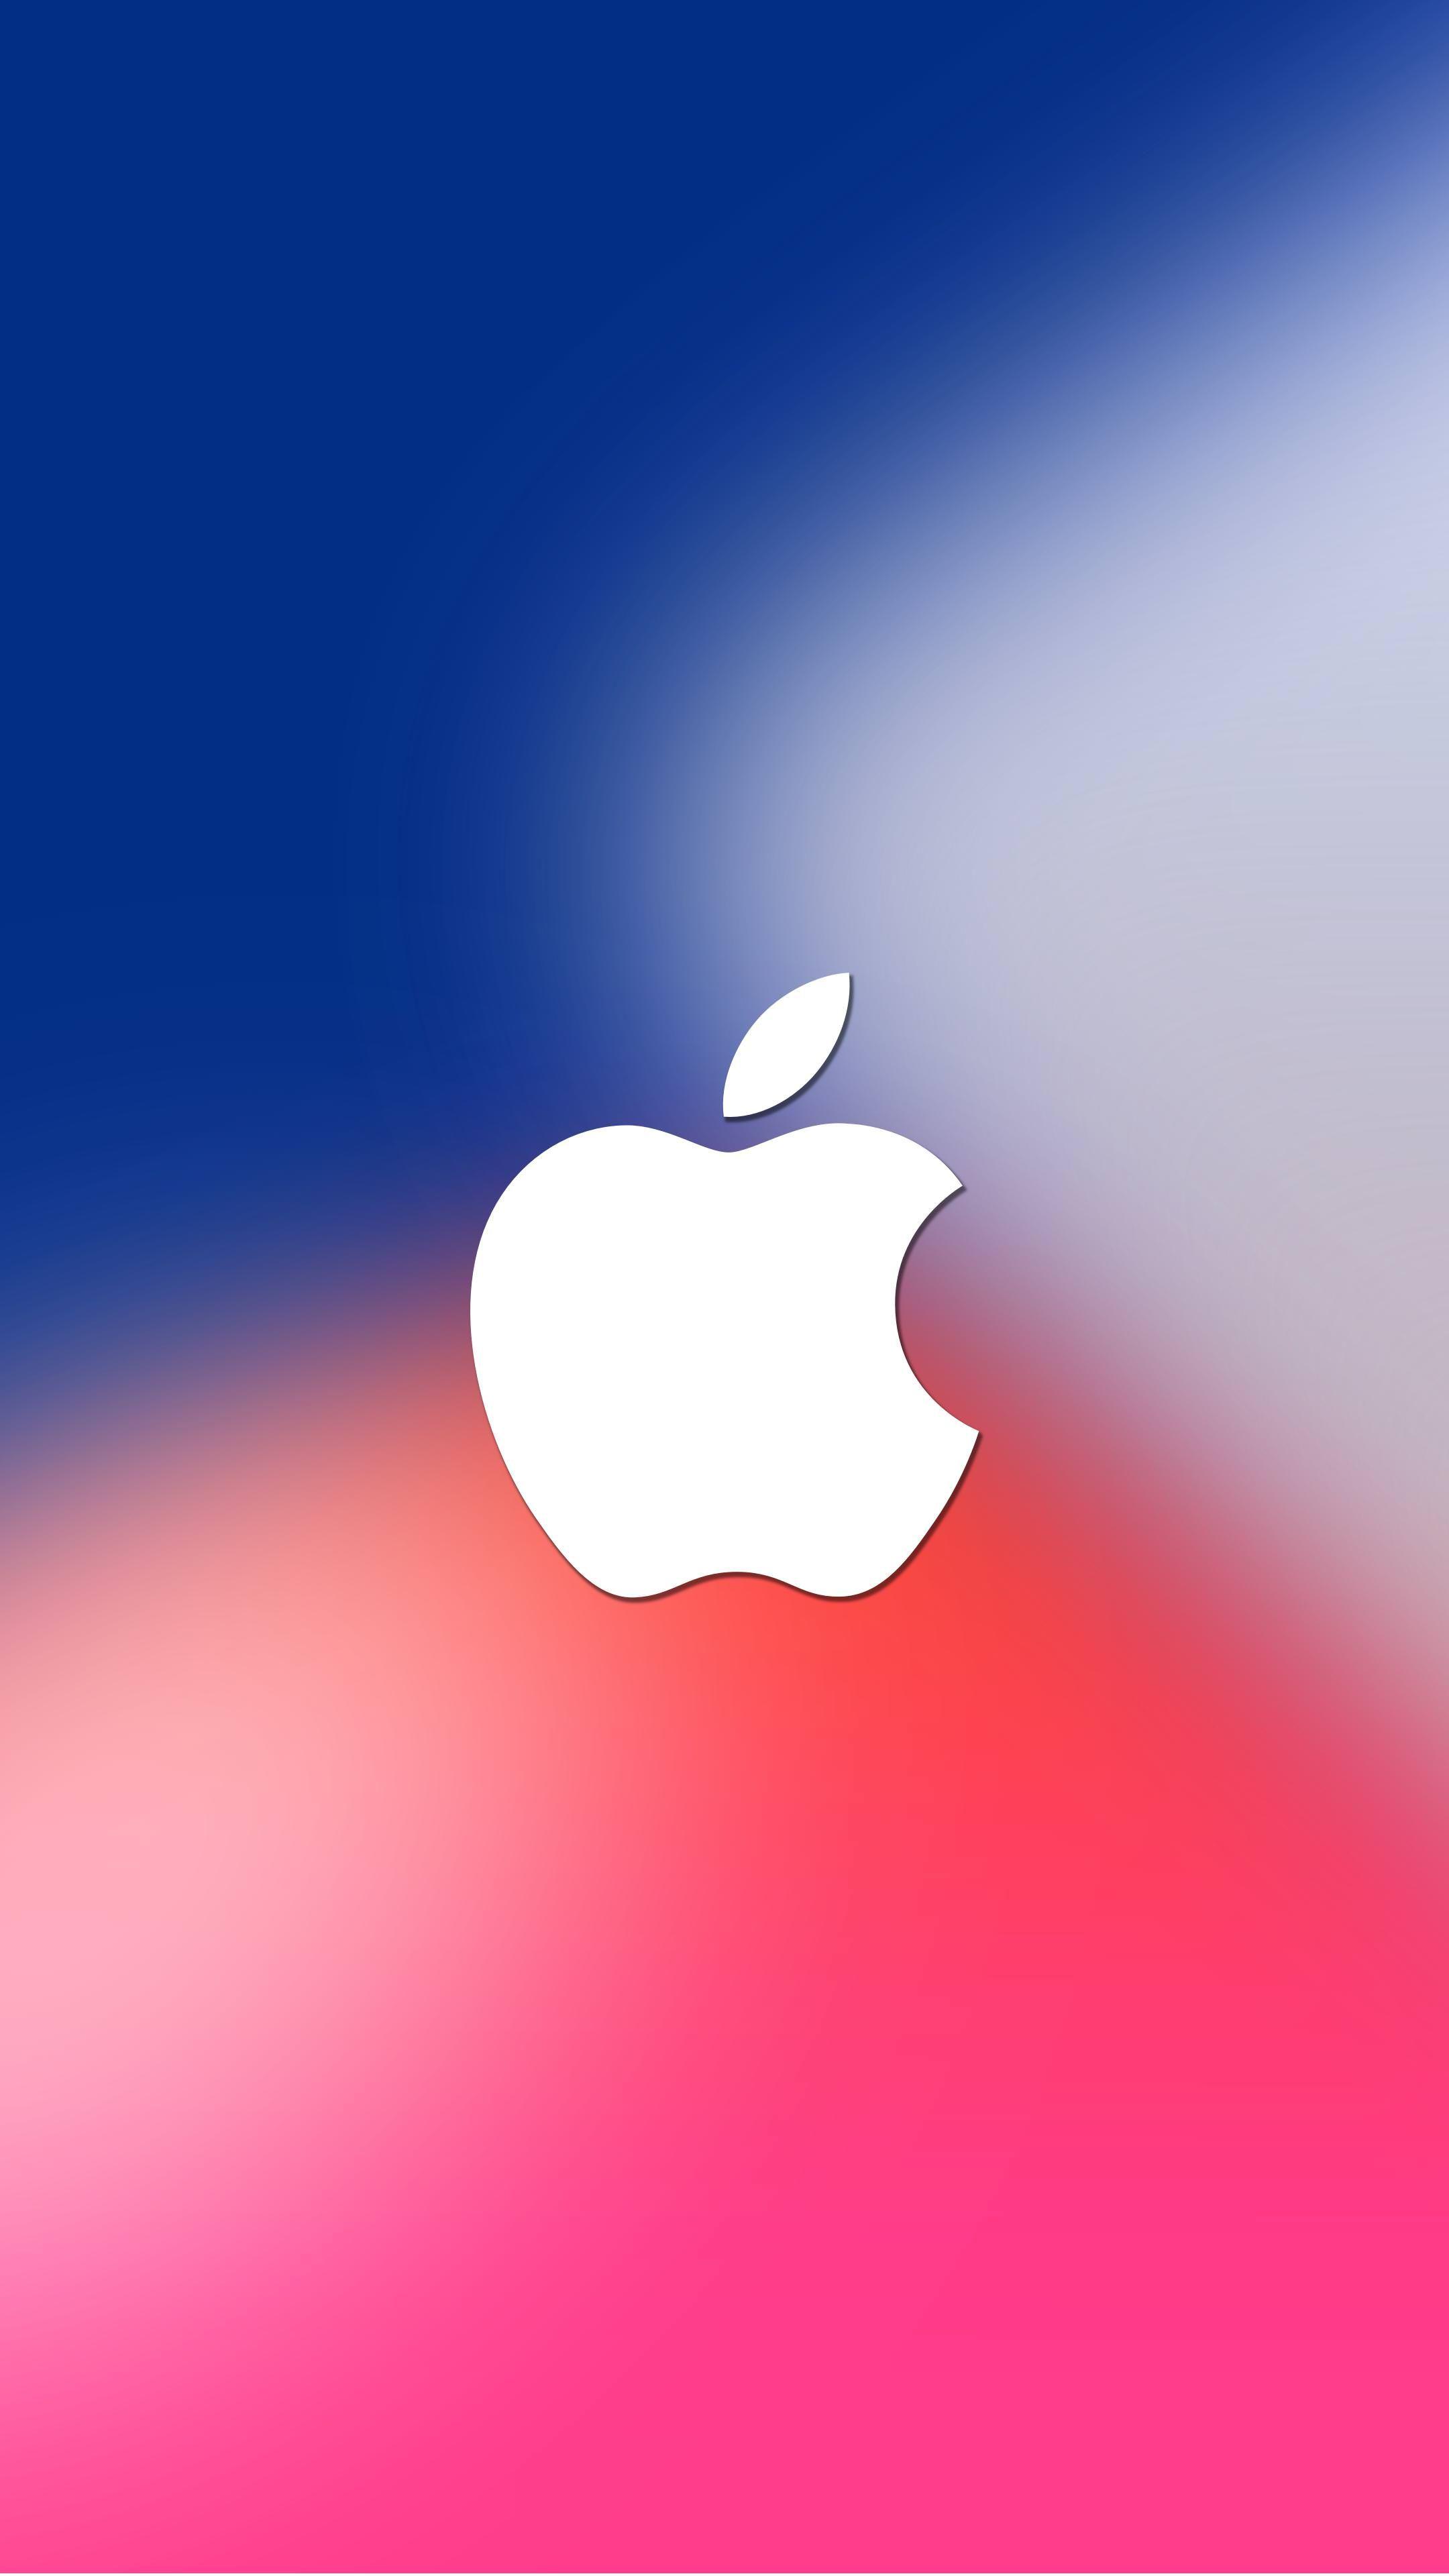 25 Apple wallpaper iphone ideas